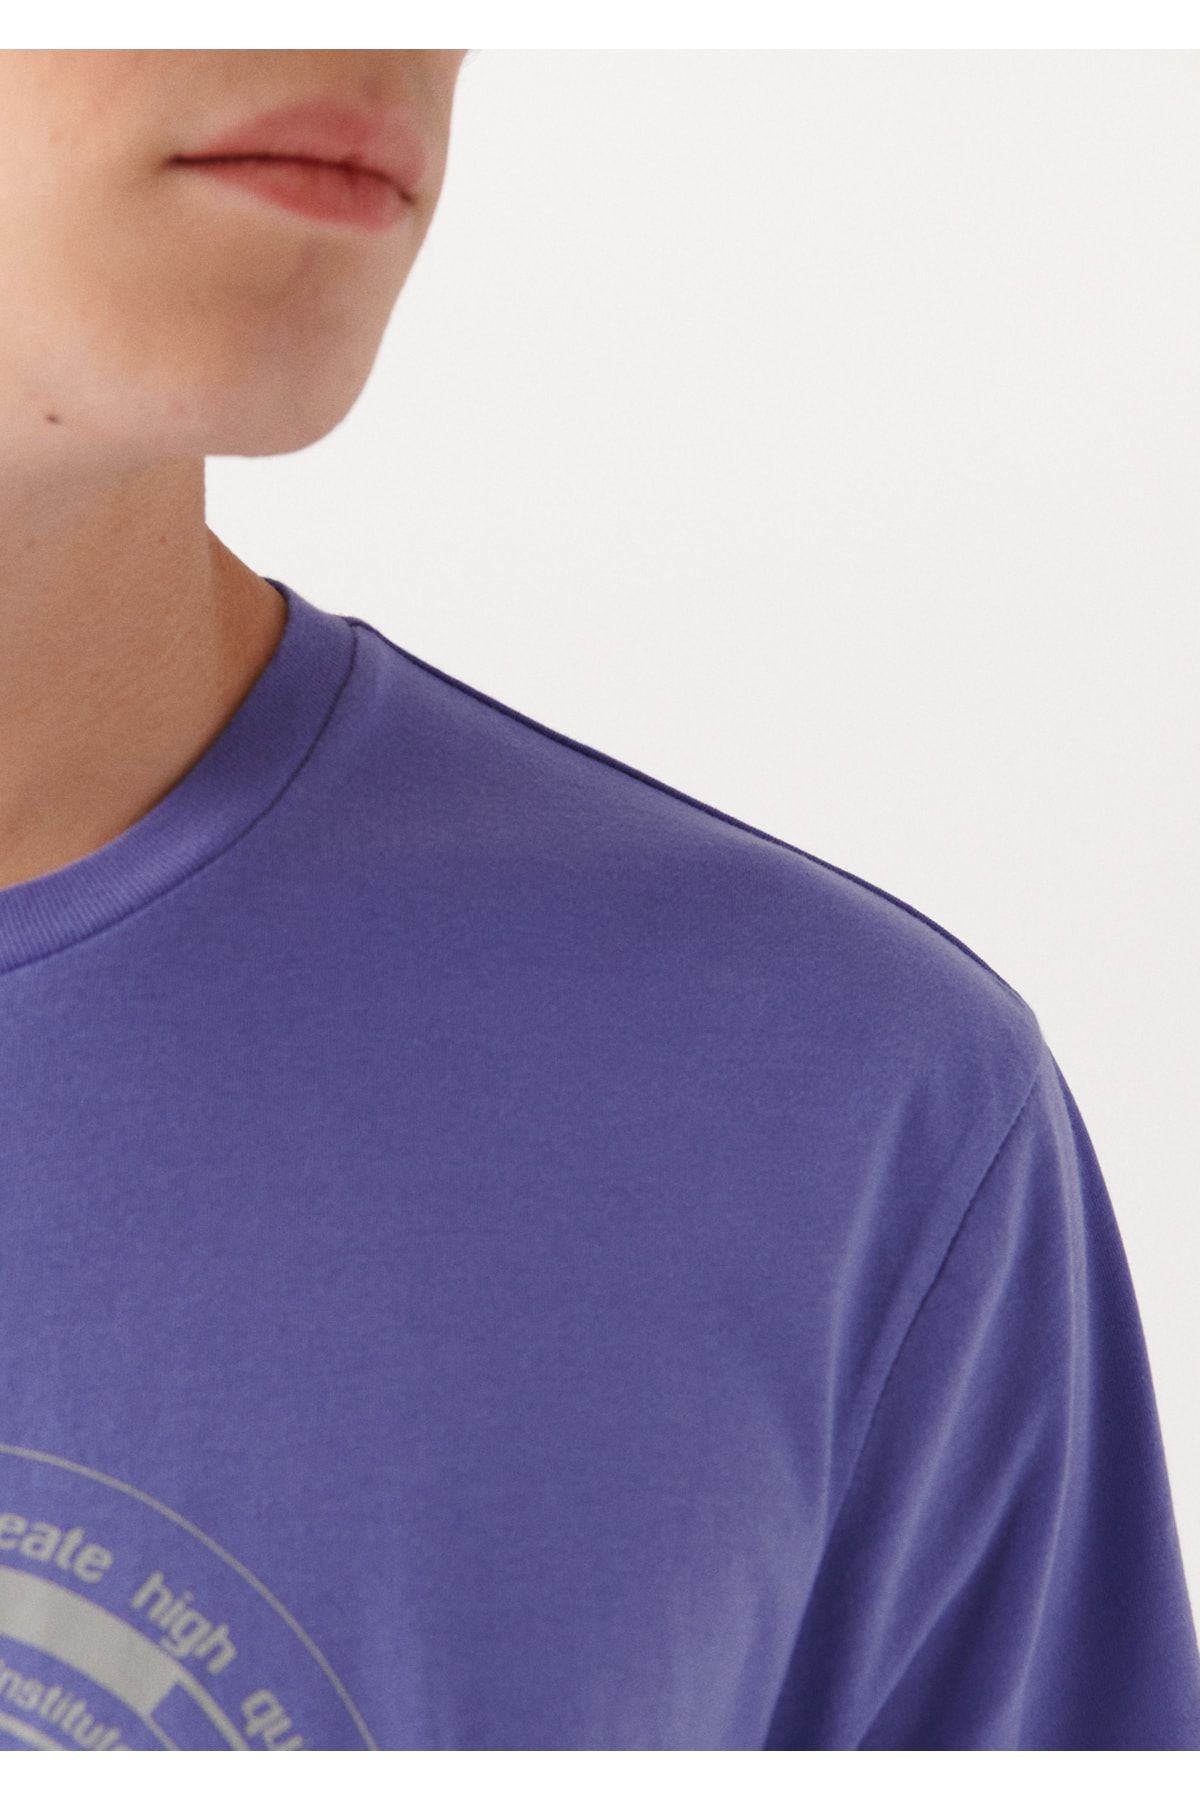 Mavi تی شرت بنفش چاپ شده به طور منظم / برش معمولی 8810644-70615